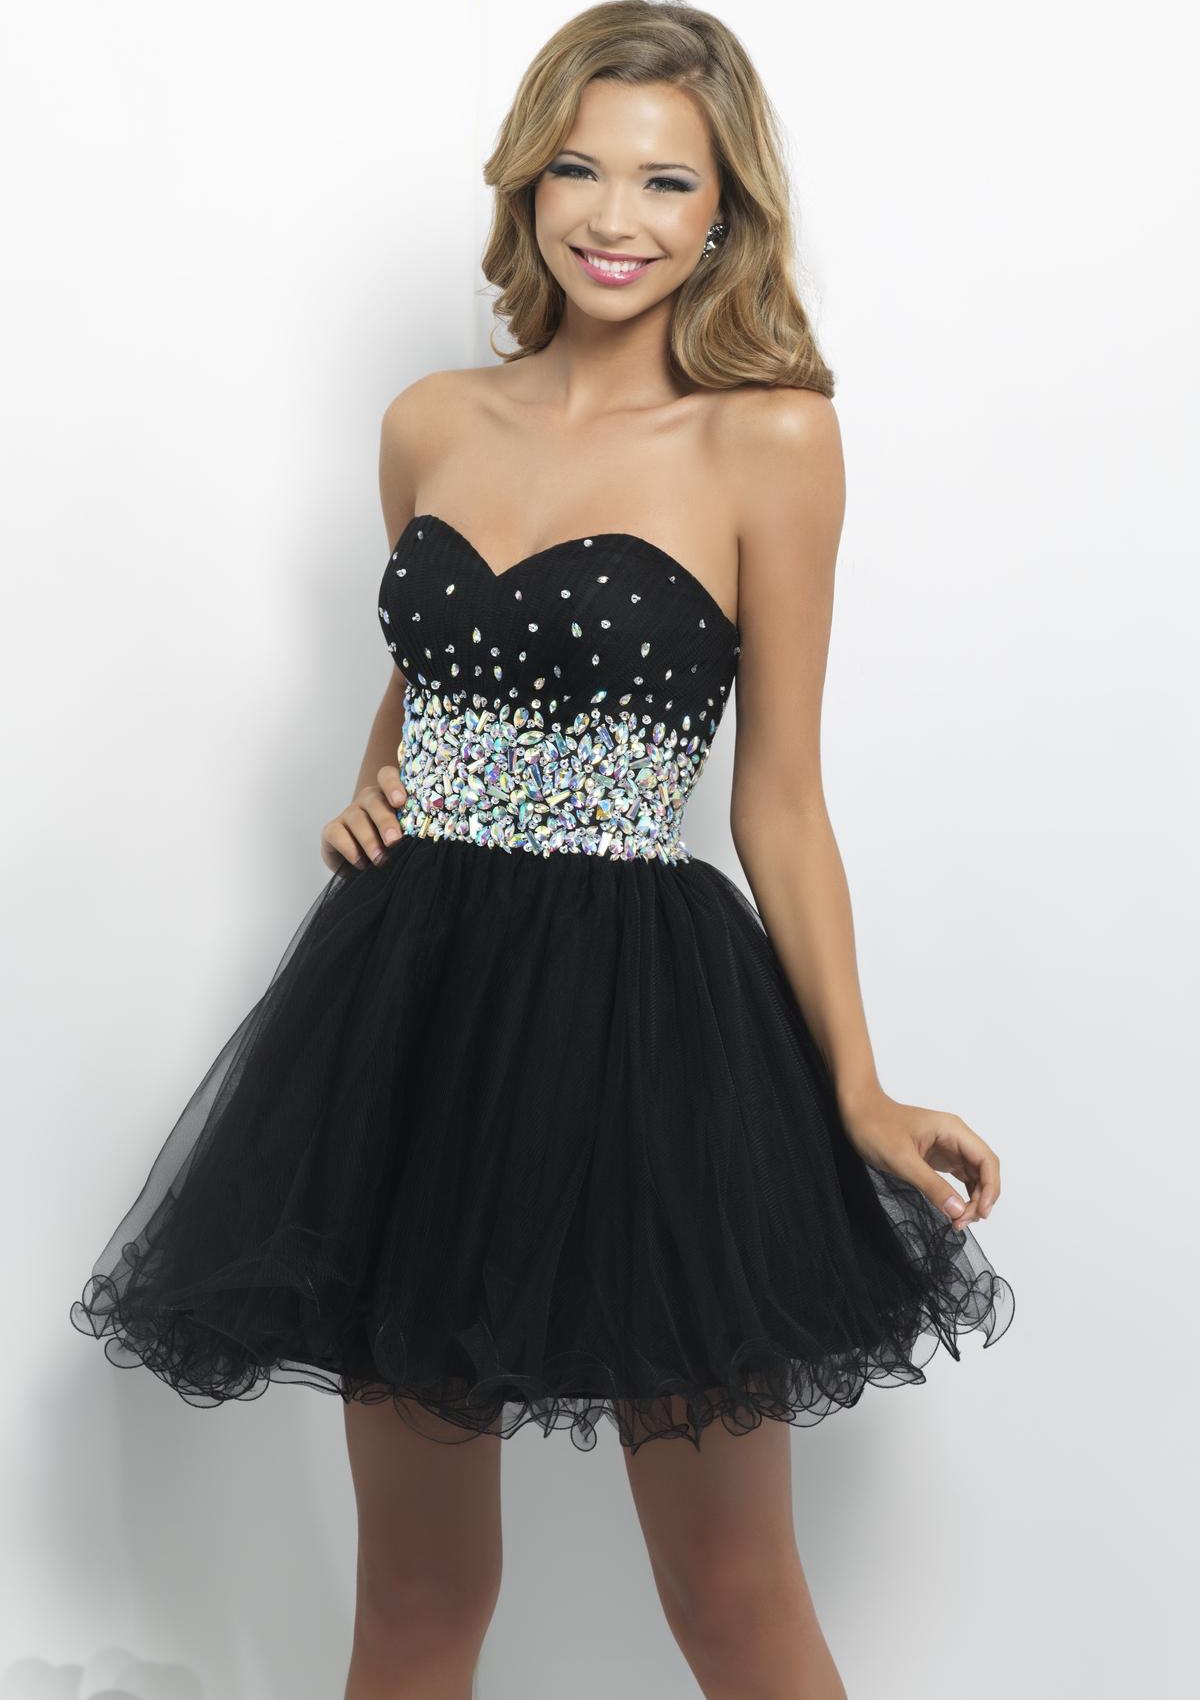 long sleeved little black dress | Cheap Prom Dresses Sale UK, Prom ...